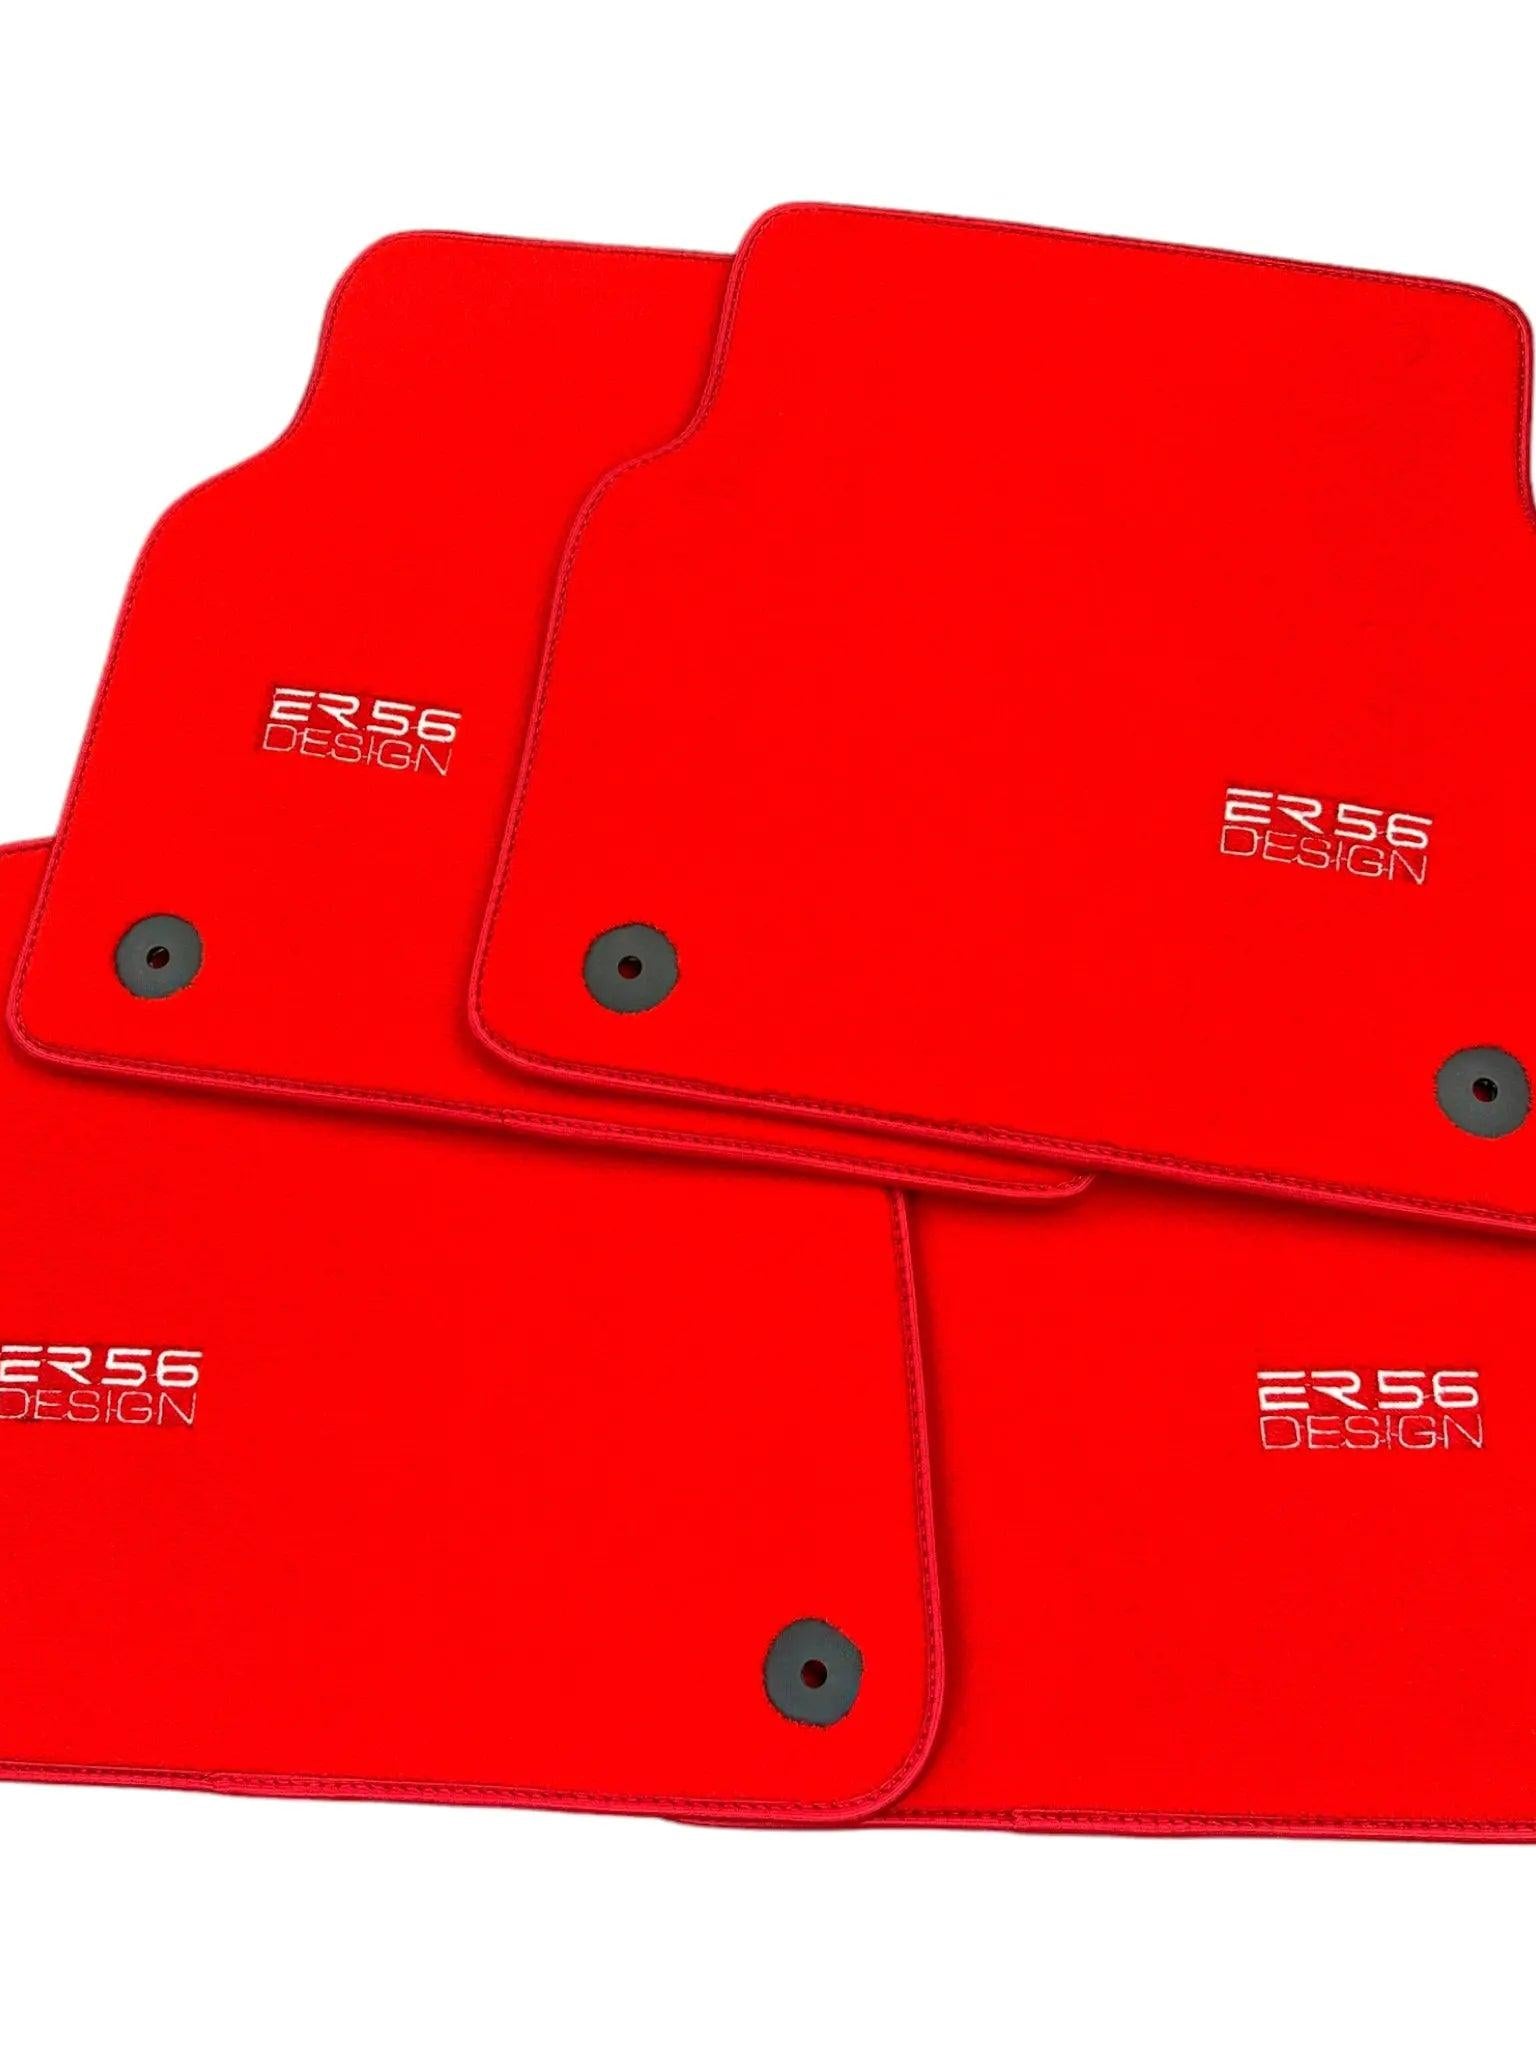 Red Floor Mats for Audi Q5 8R (2008-2017) | ER56 Design